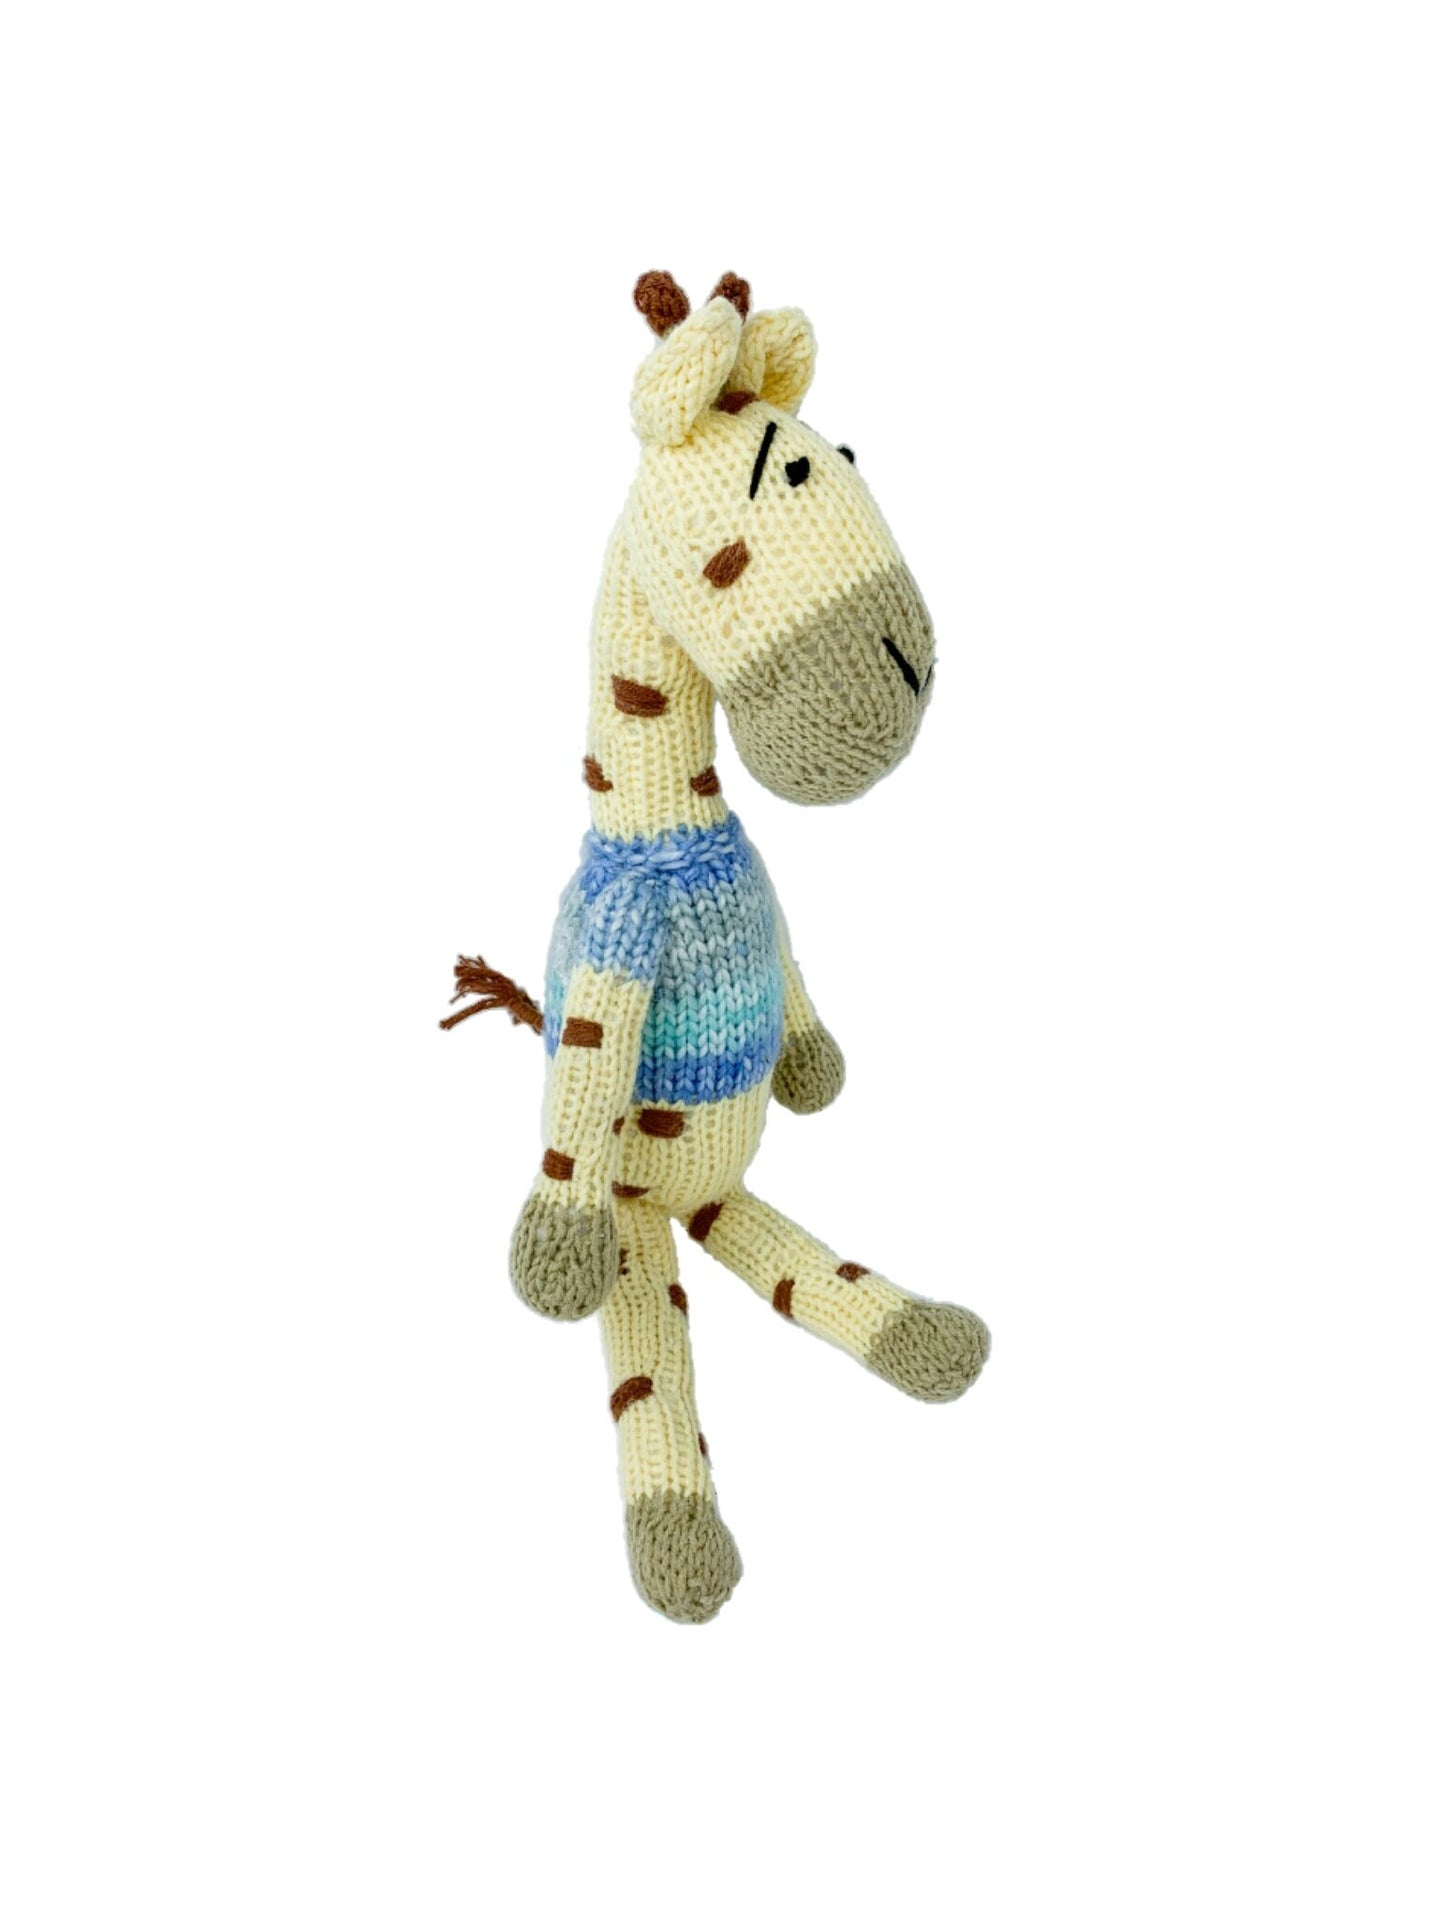 Baby Giraffe Handmade Crochet stuffed Doll for Montessori Play, Nursery Decor, and Baby Shower Gifts . Granddaughter, niece, nephew & grandson